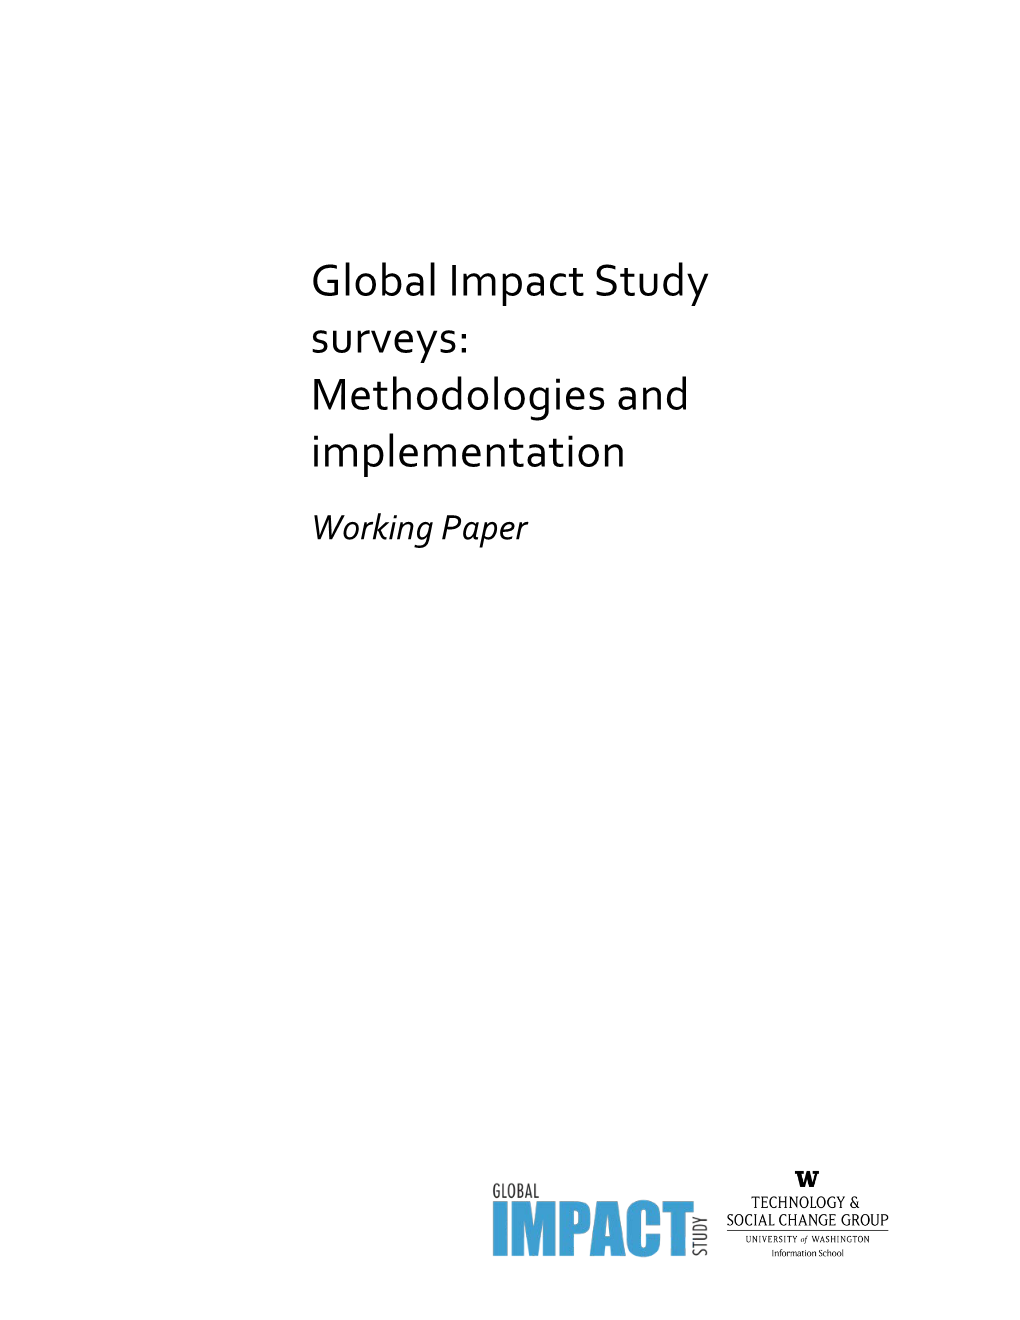 Global Impact Study Surveys: Methodologies and Implementation